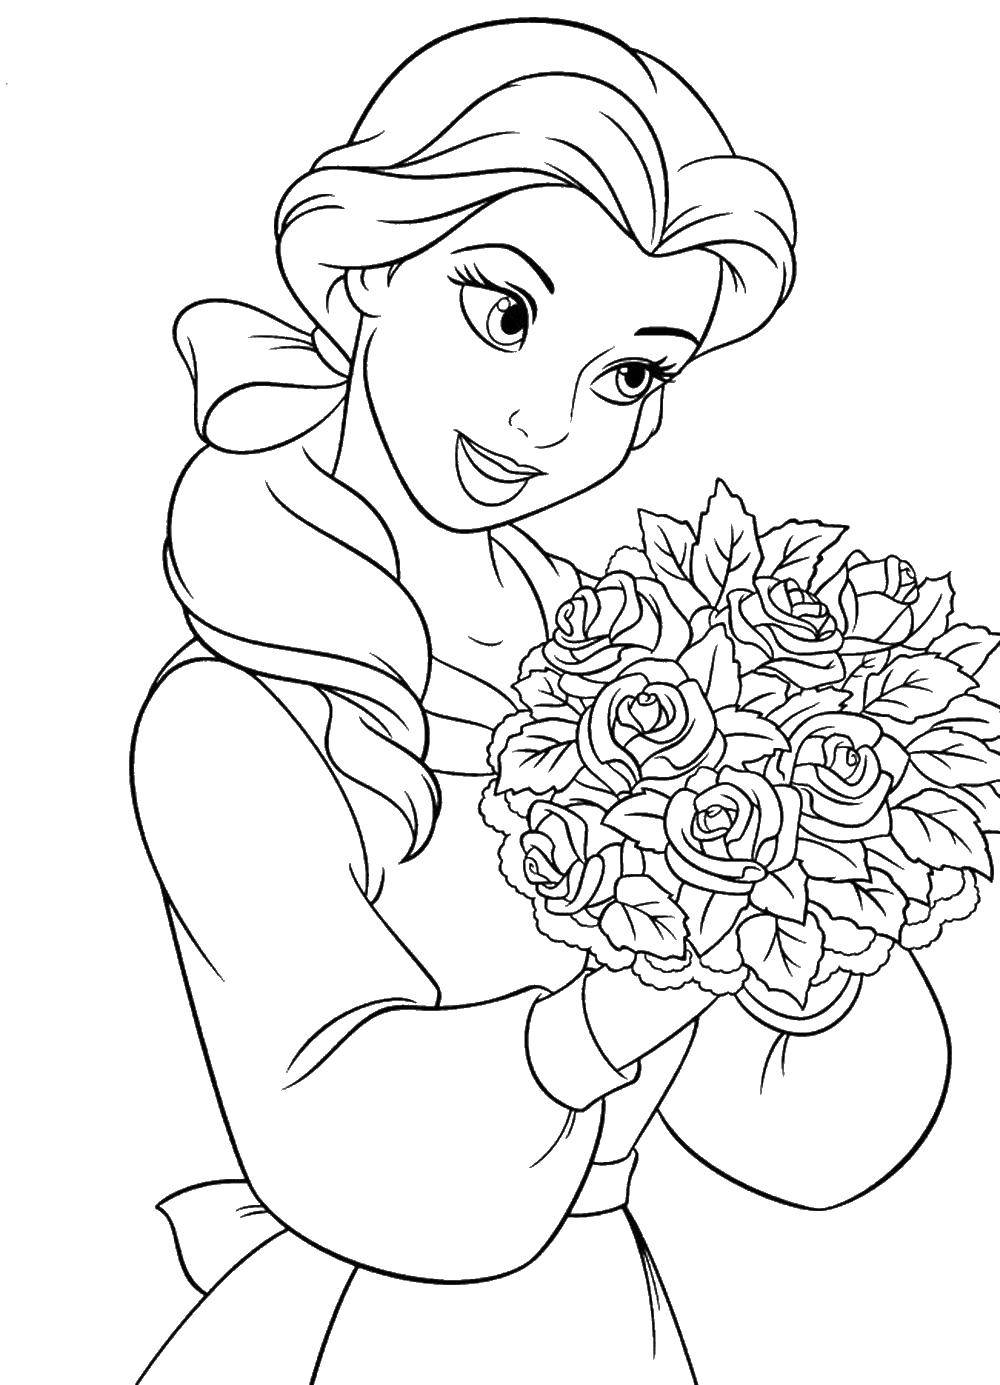 Coloring Belle and bouquet. Category Princess. Tags:  Belle, bouquet, flowers.